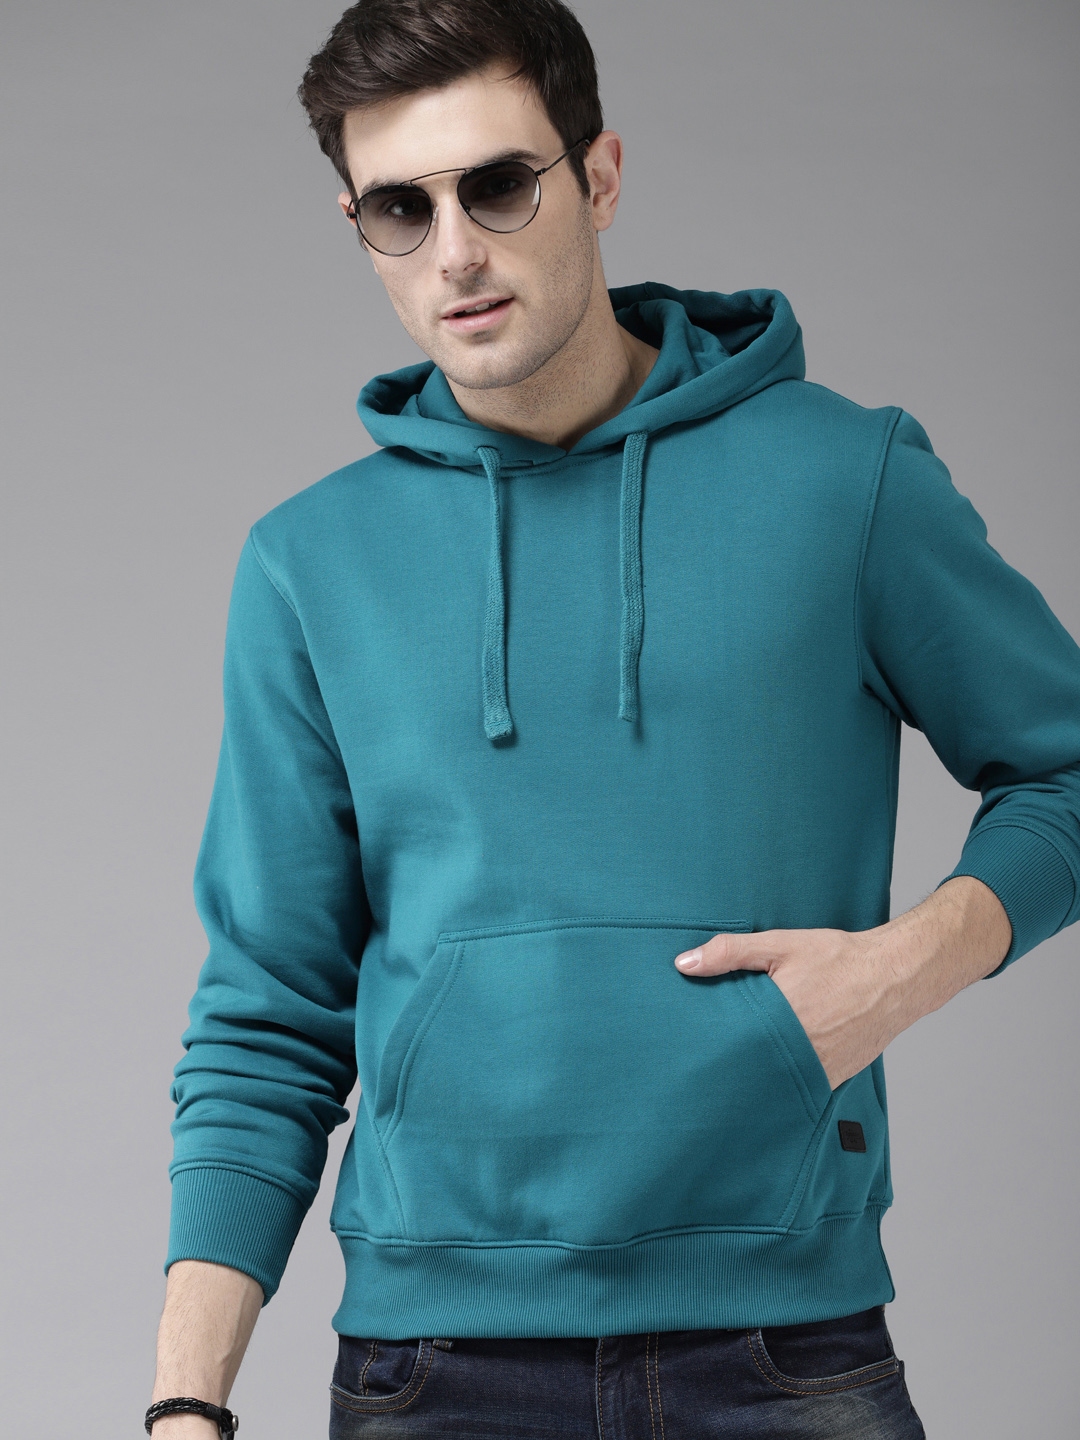 Buy The Roadster Lifestyle Co Men Teal Blue Solid Hooded Sweatshirt ...